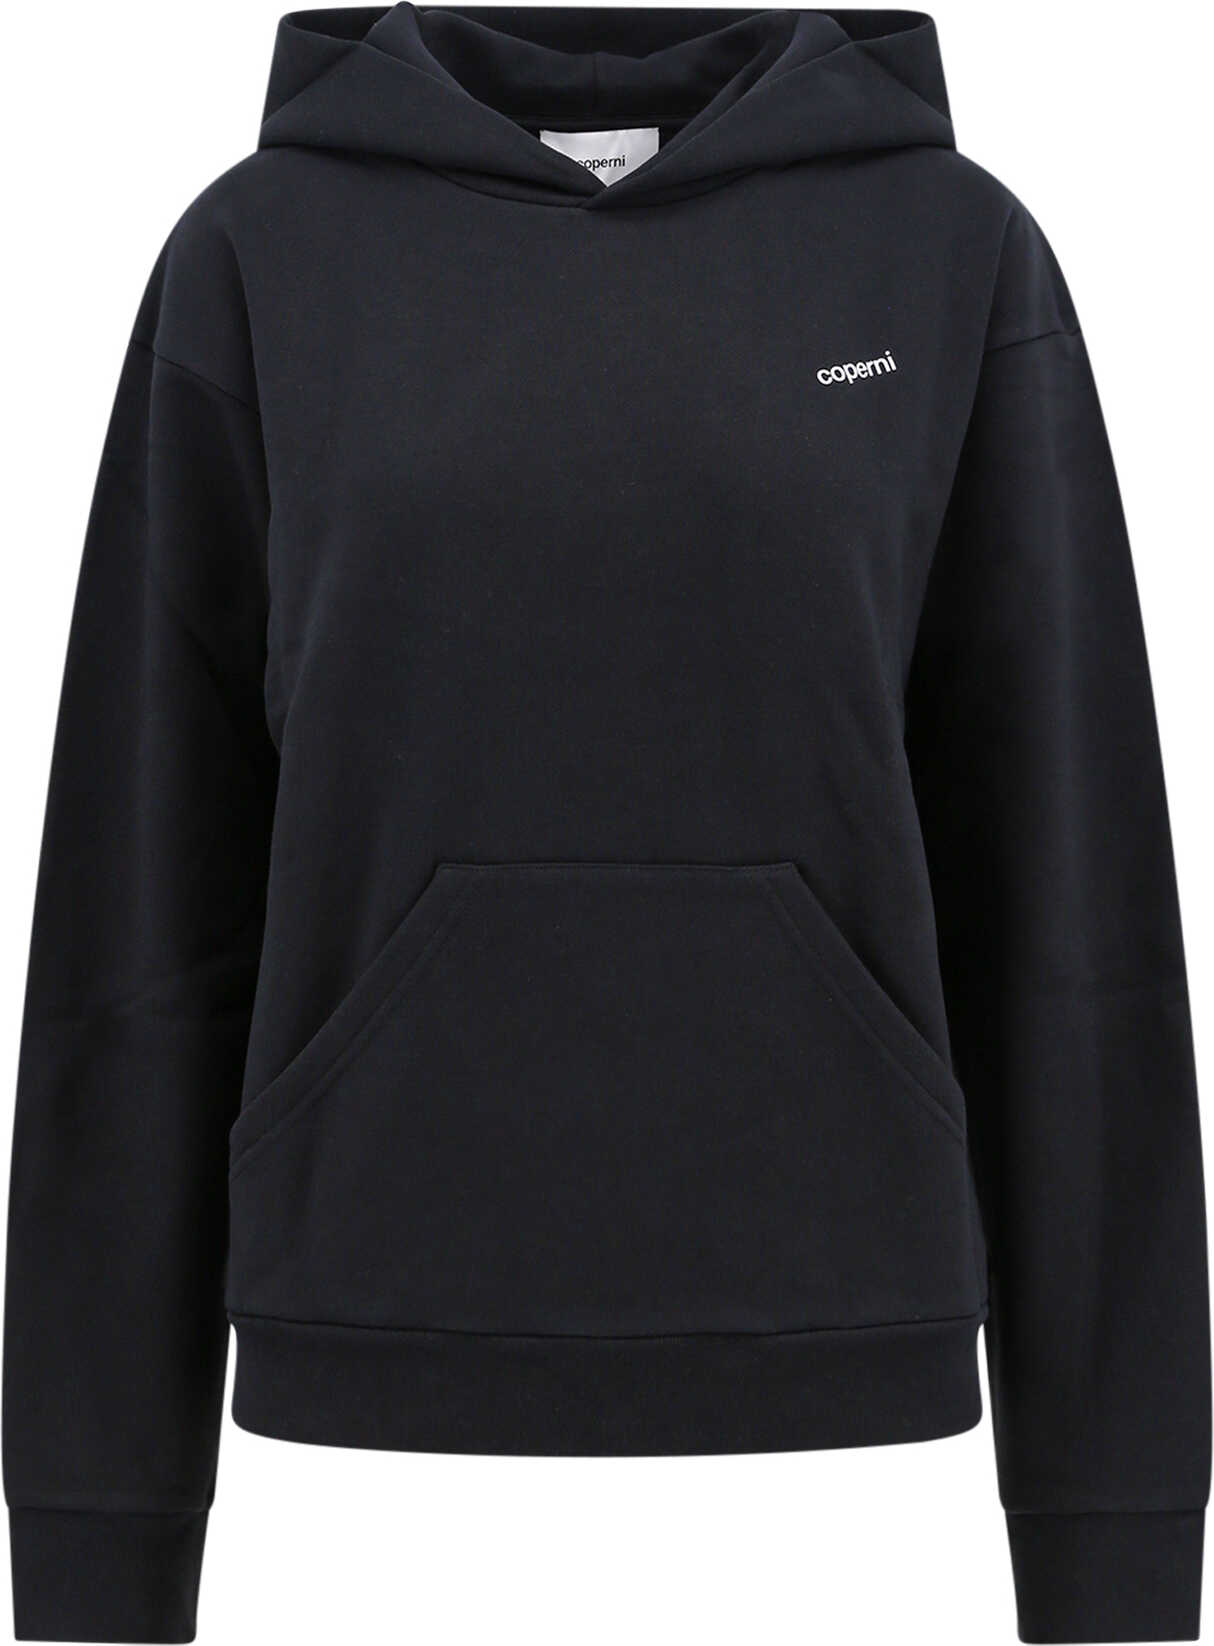 COPERNI Sweatshirt Black